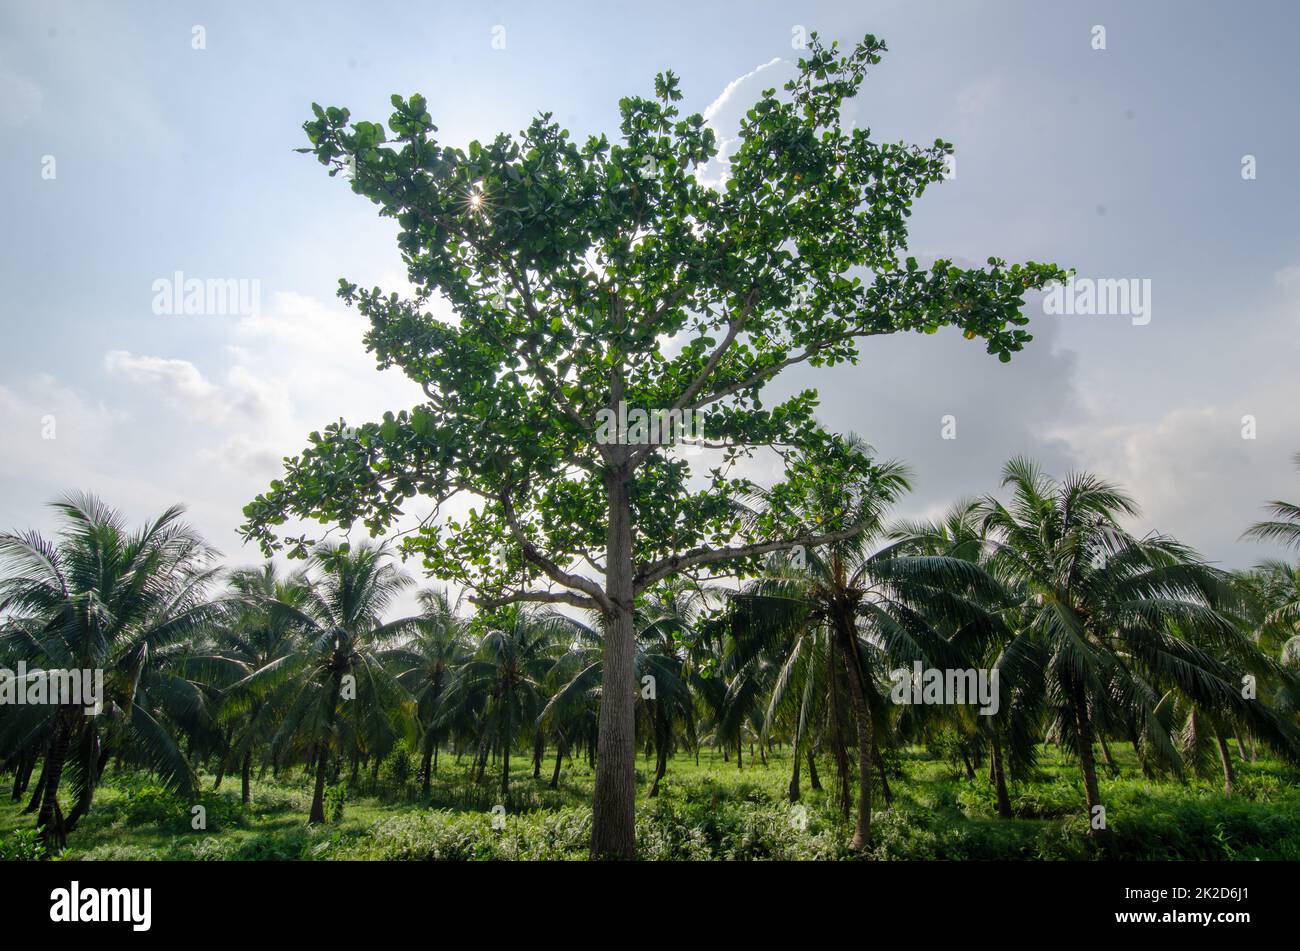 Green trees at the coconut plantation Stock Photo